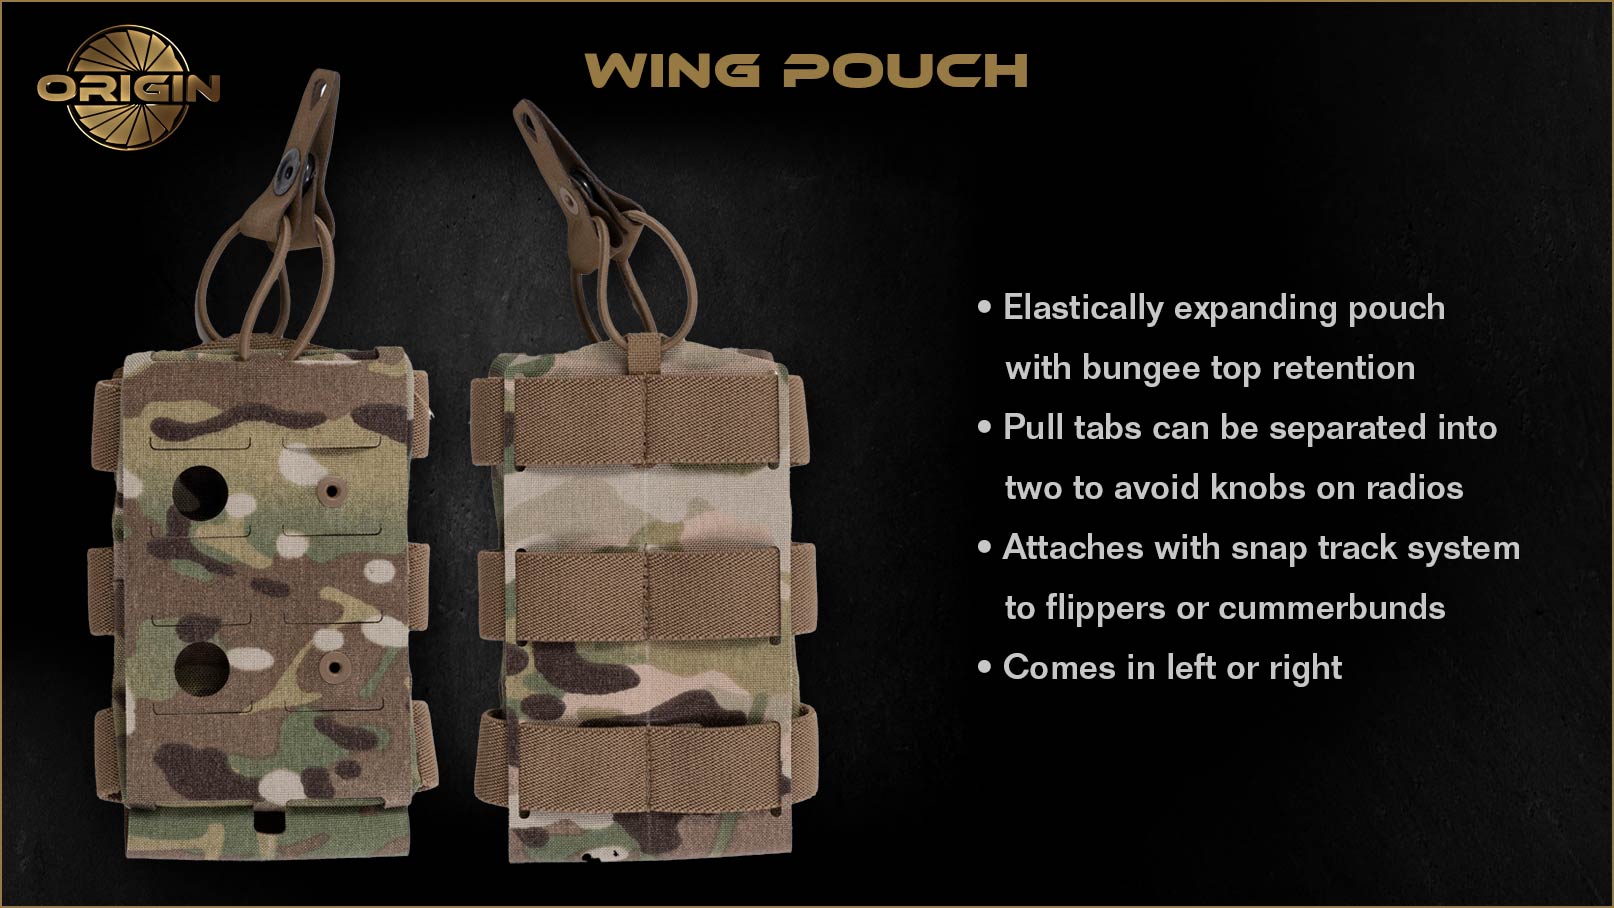 origin wing pouch for radio